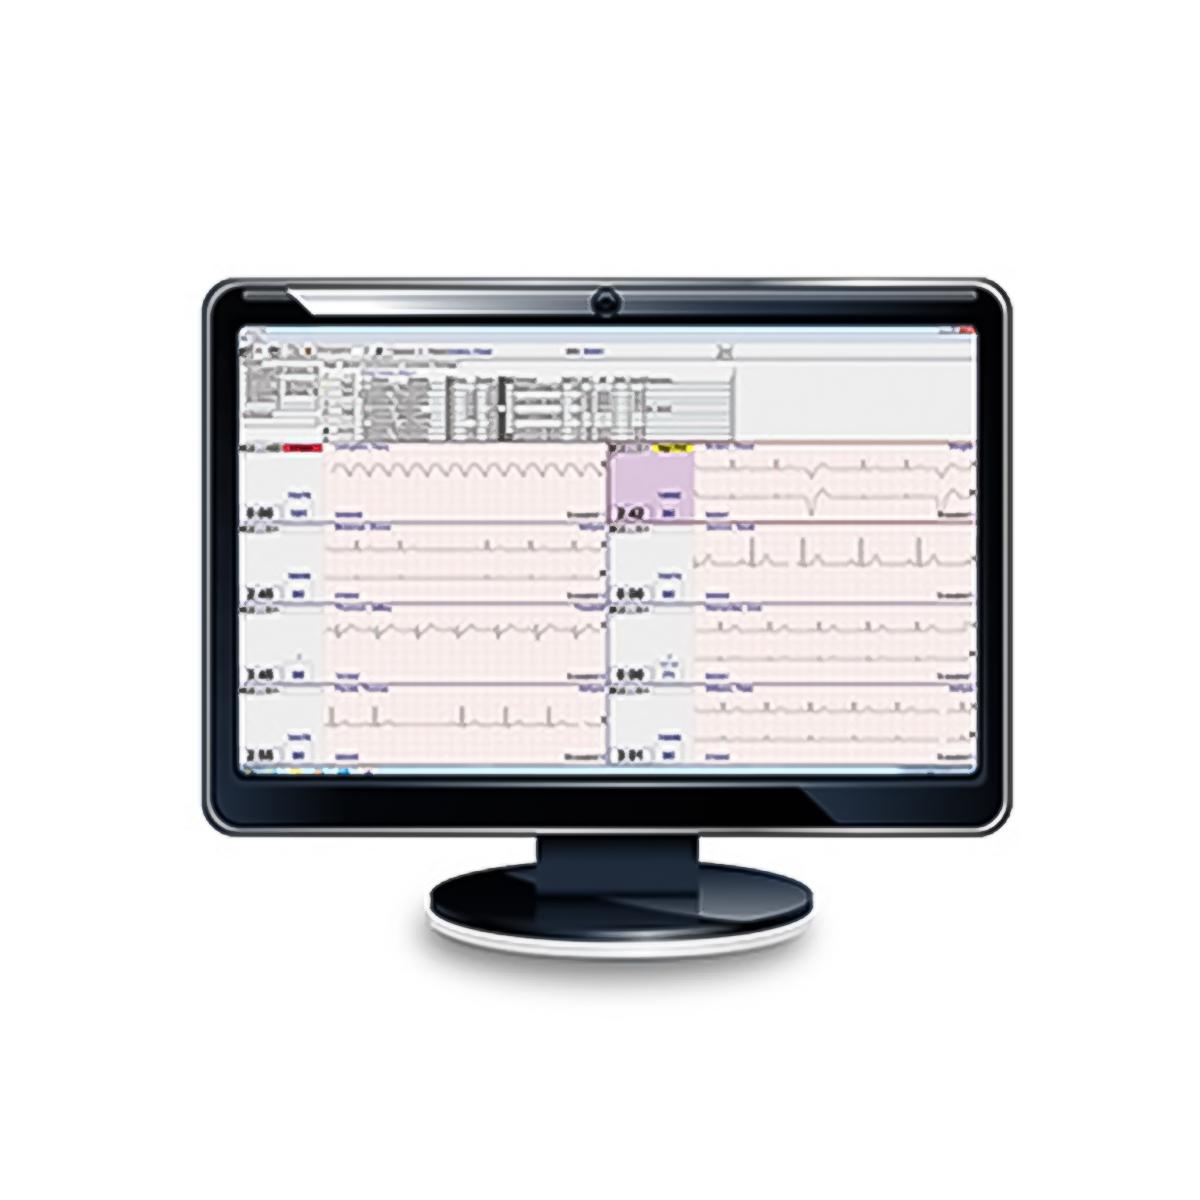 Q-Tel RMS on monitor